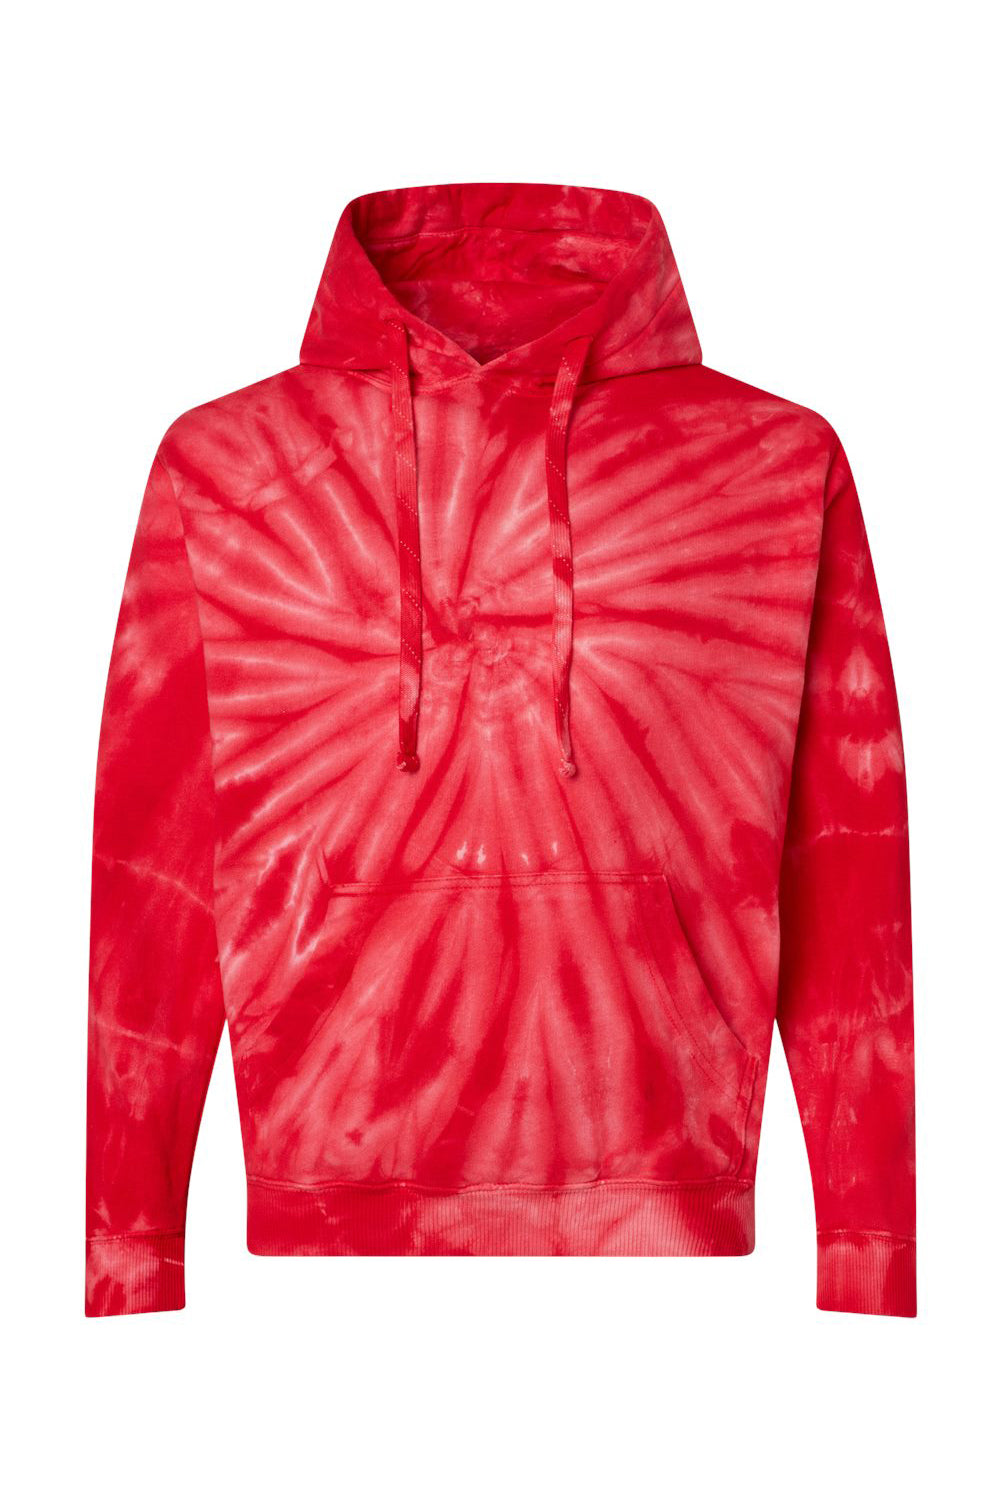 Dyenomite 854CY Mens Cyclone Tie Dyed Hooded Sweatshirt Hoodie Red Flat Front